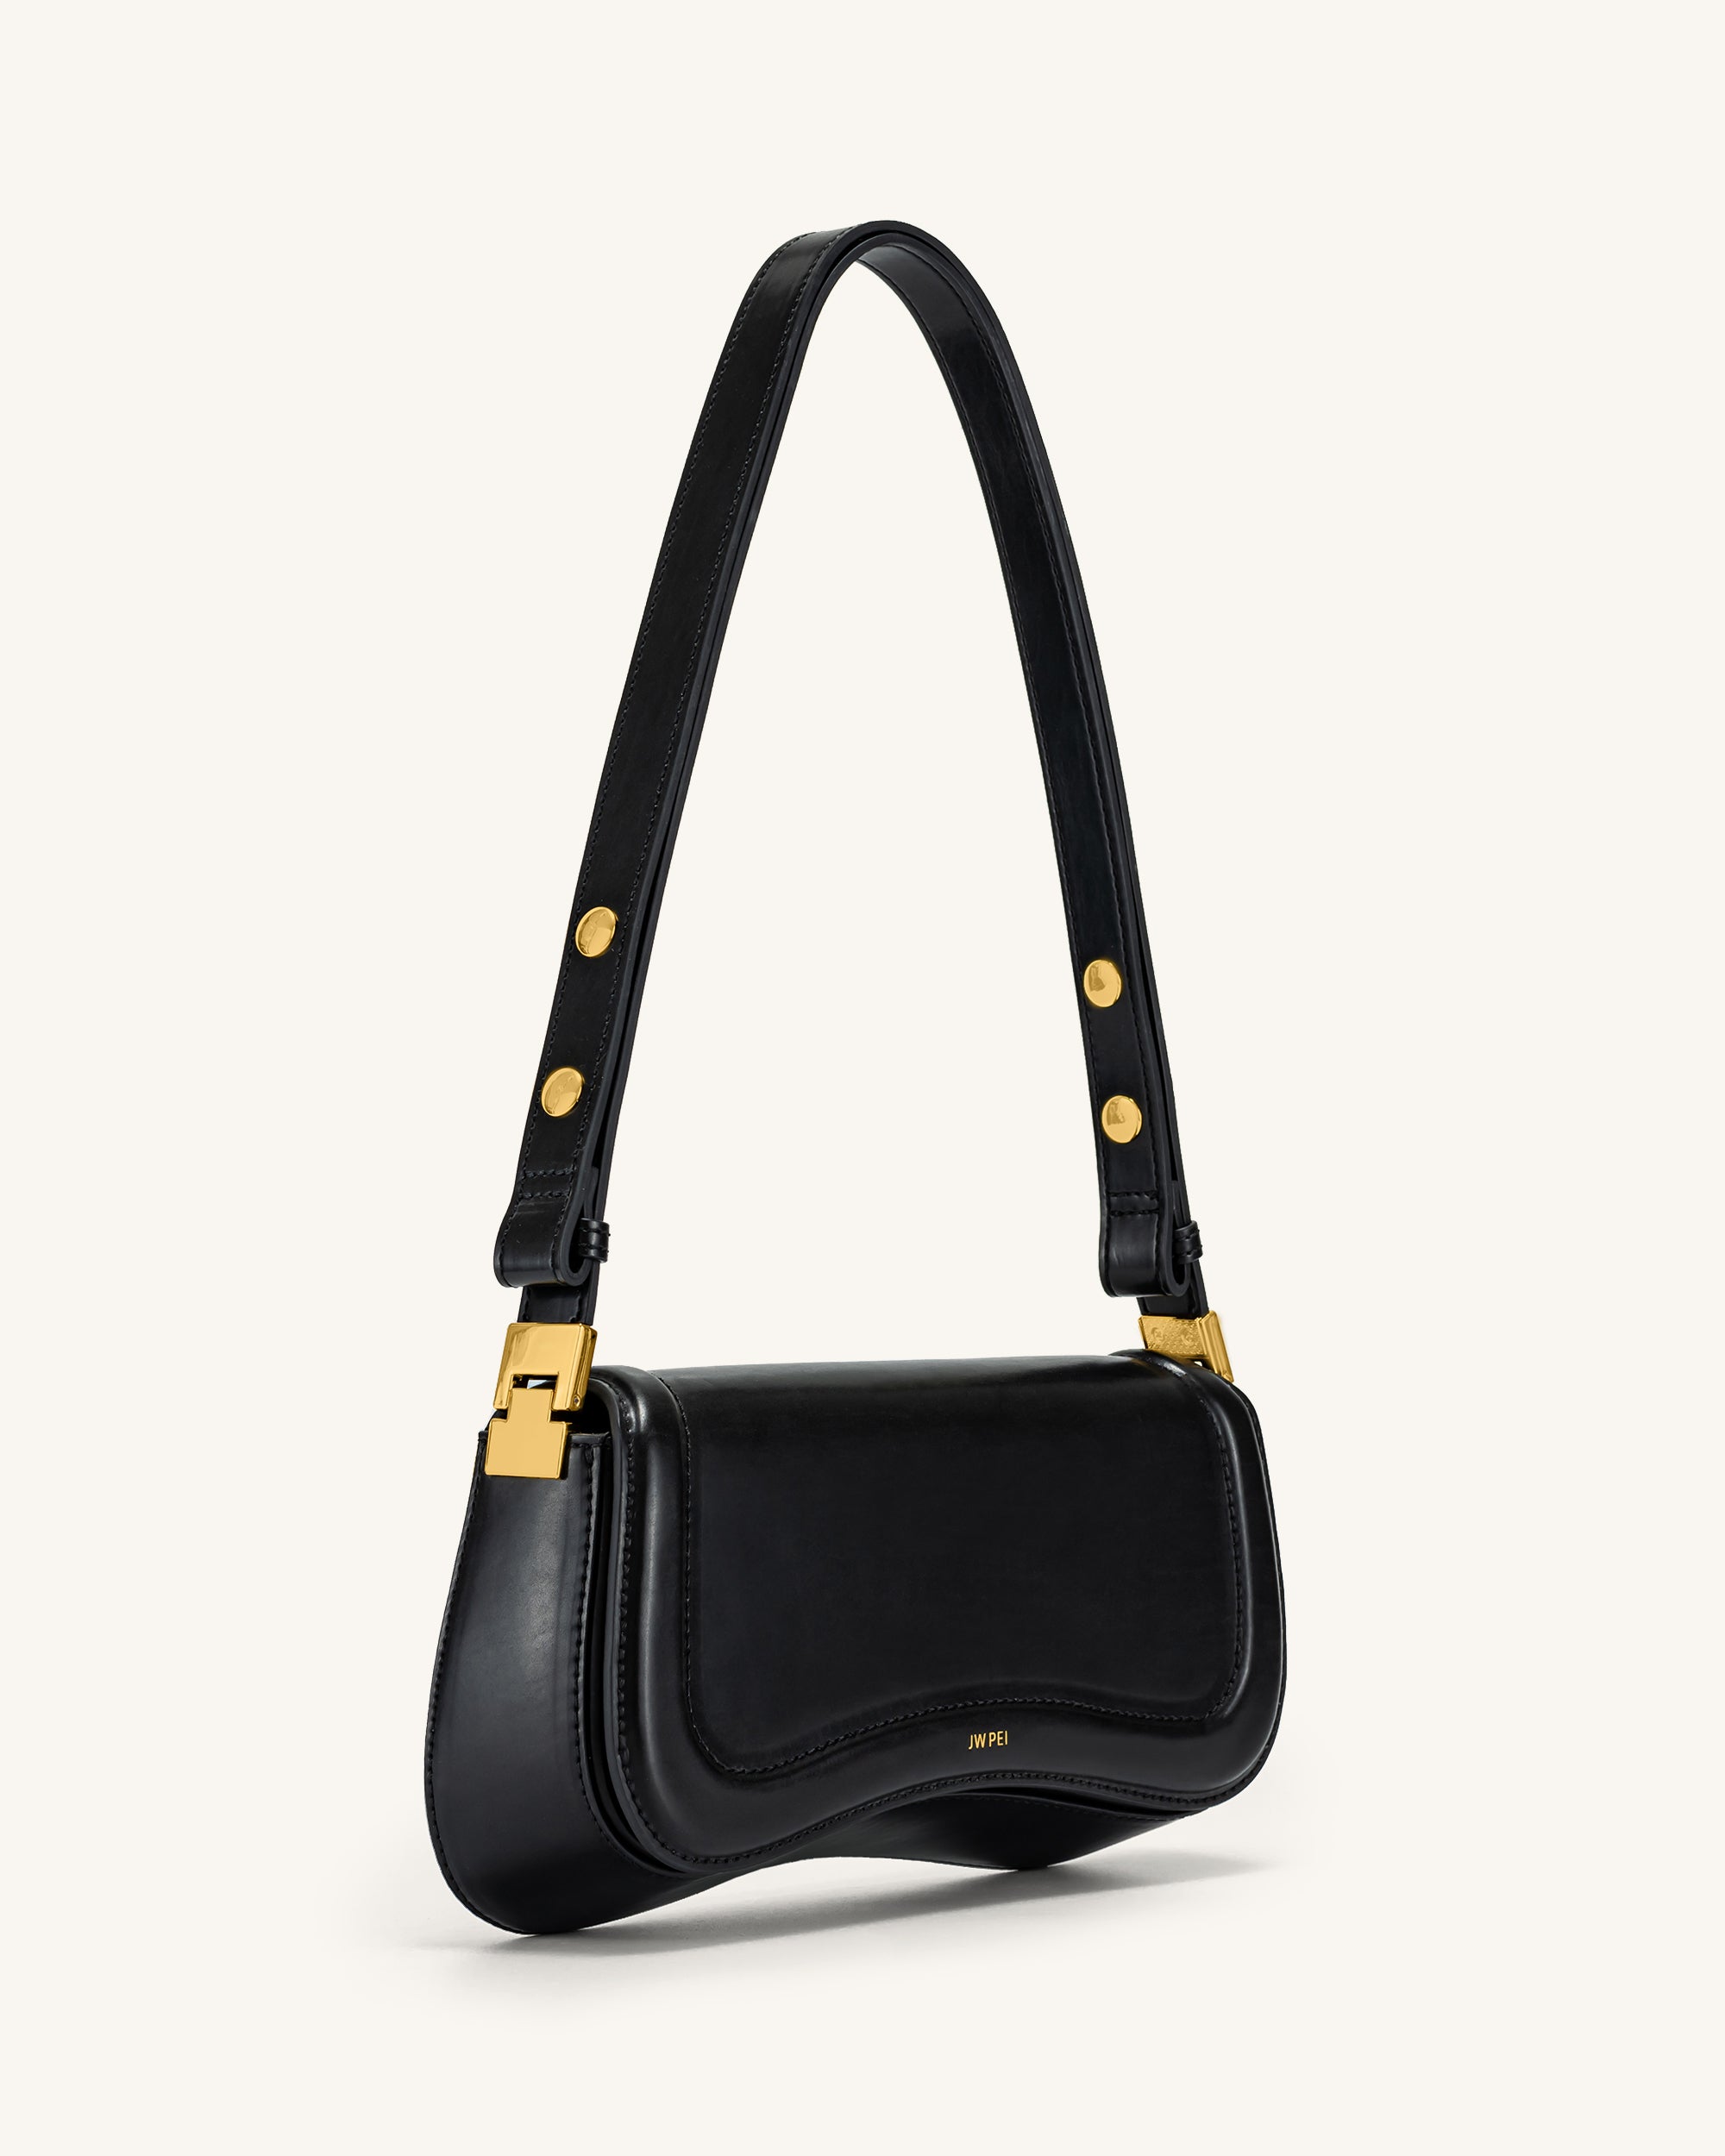 JW Pei envelope Crossbody Bag Black - $72 (20% Off Retail) - From